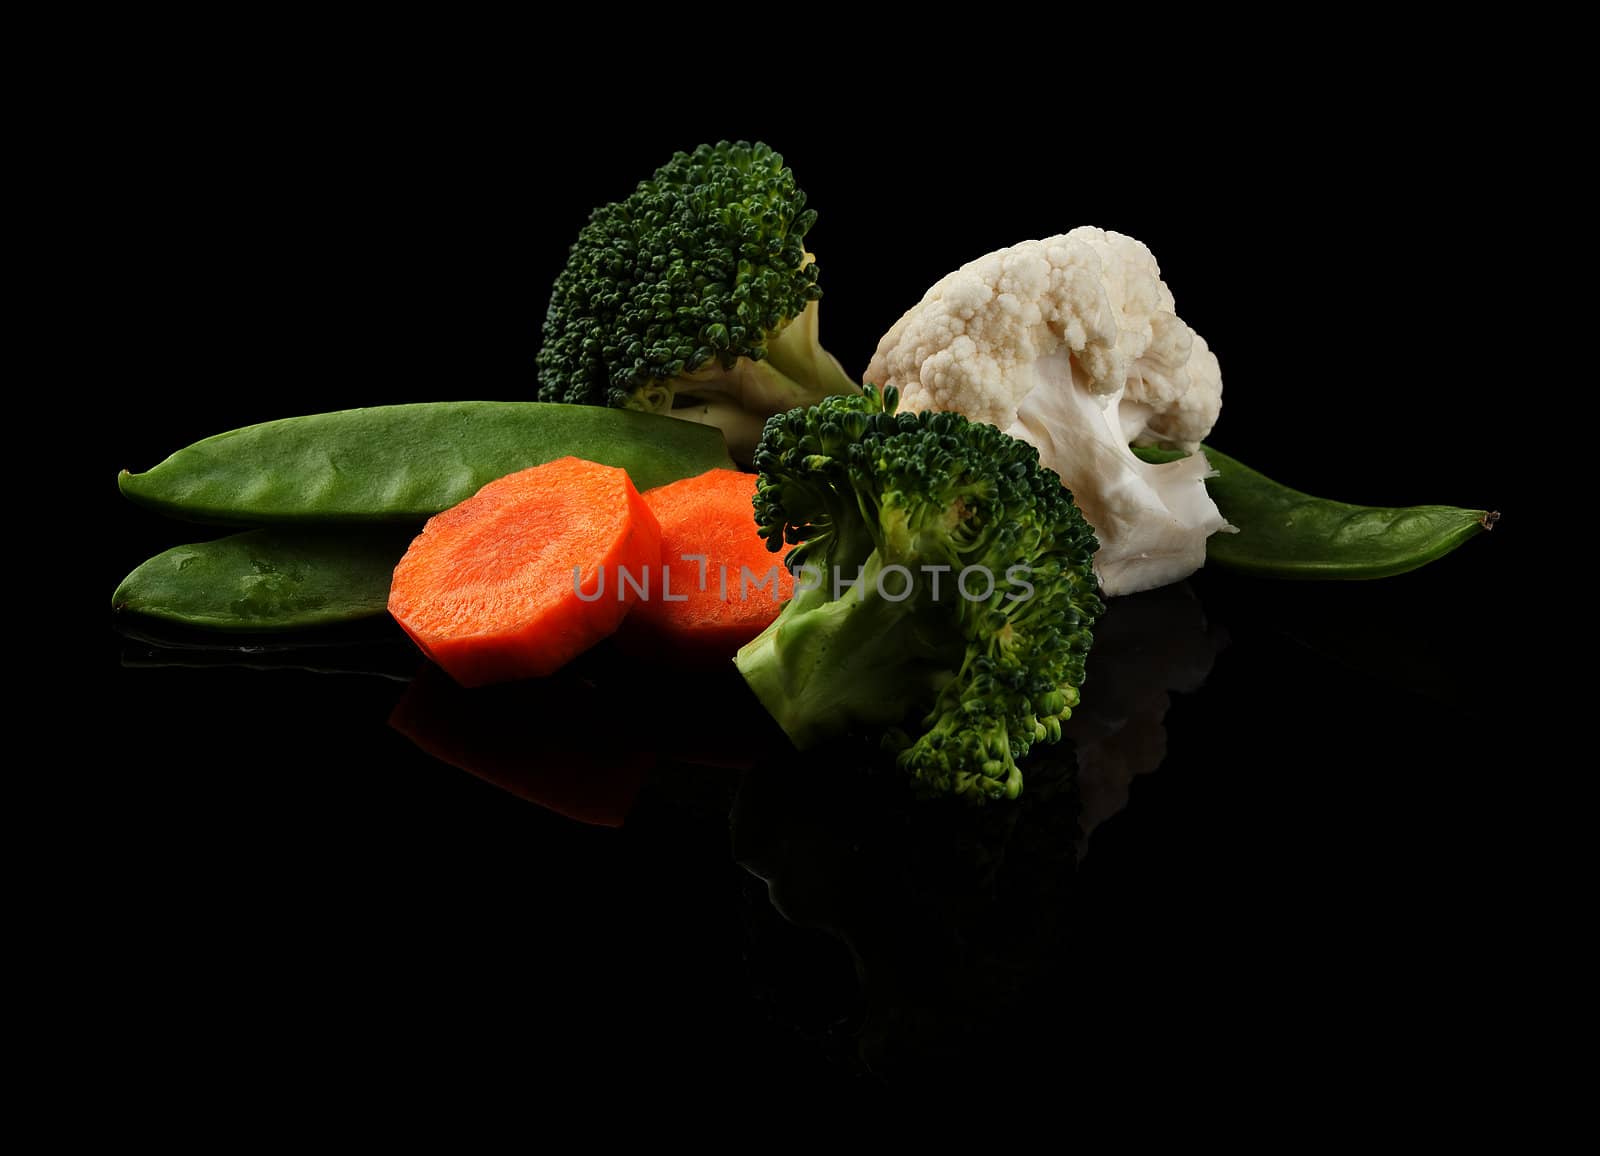 Vegetables by Angorius